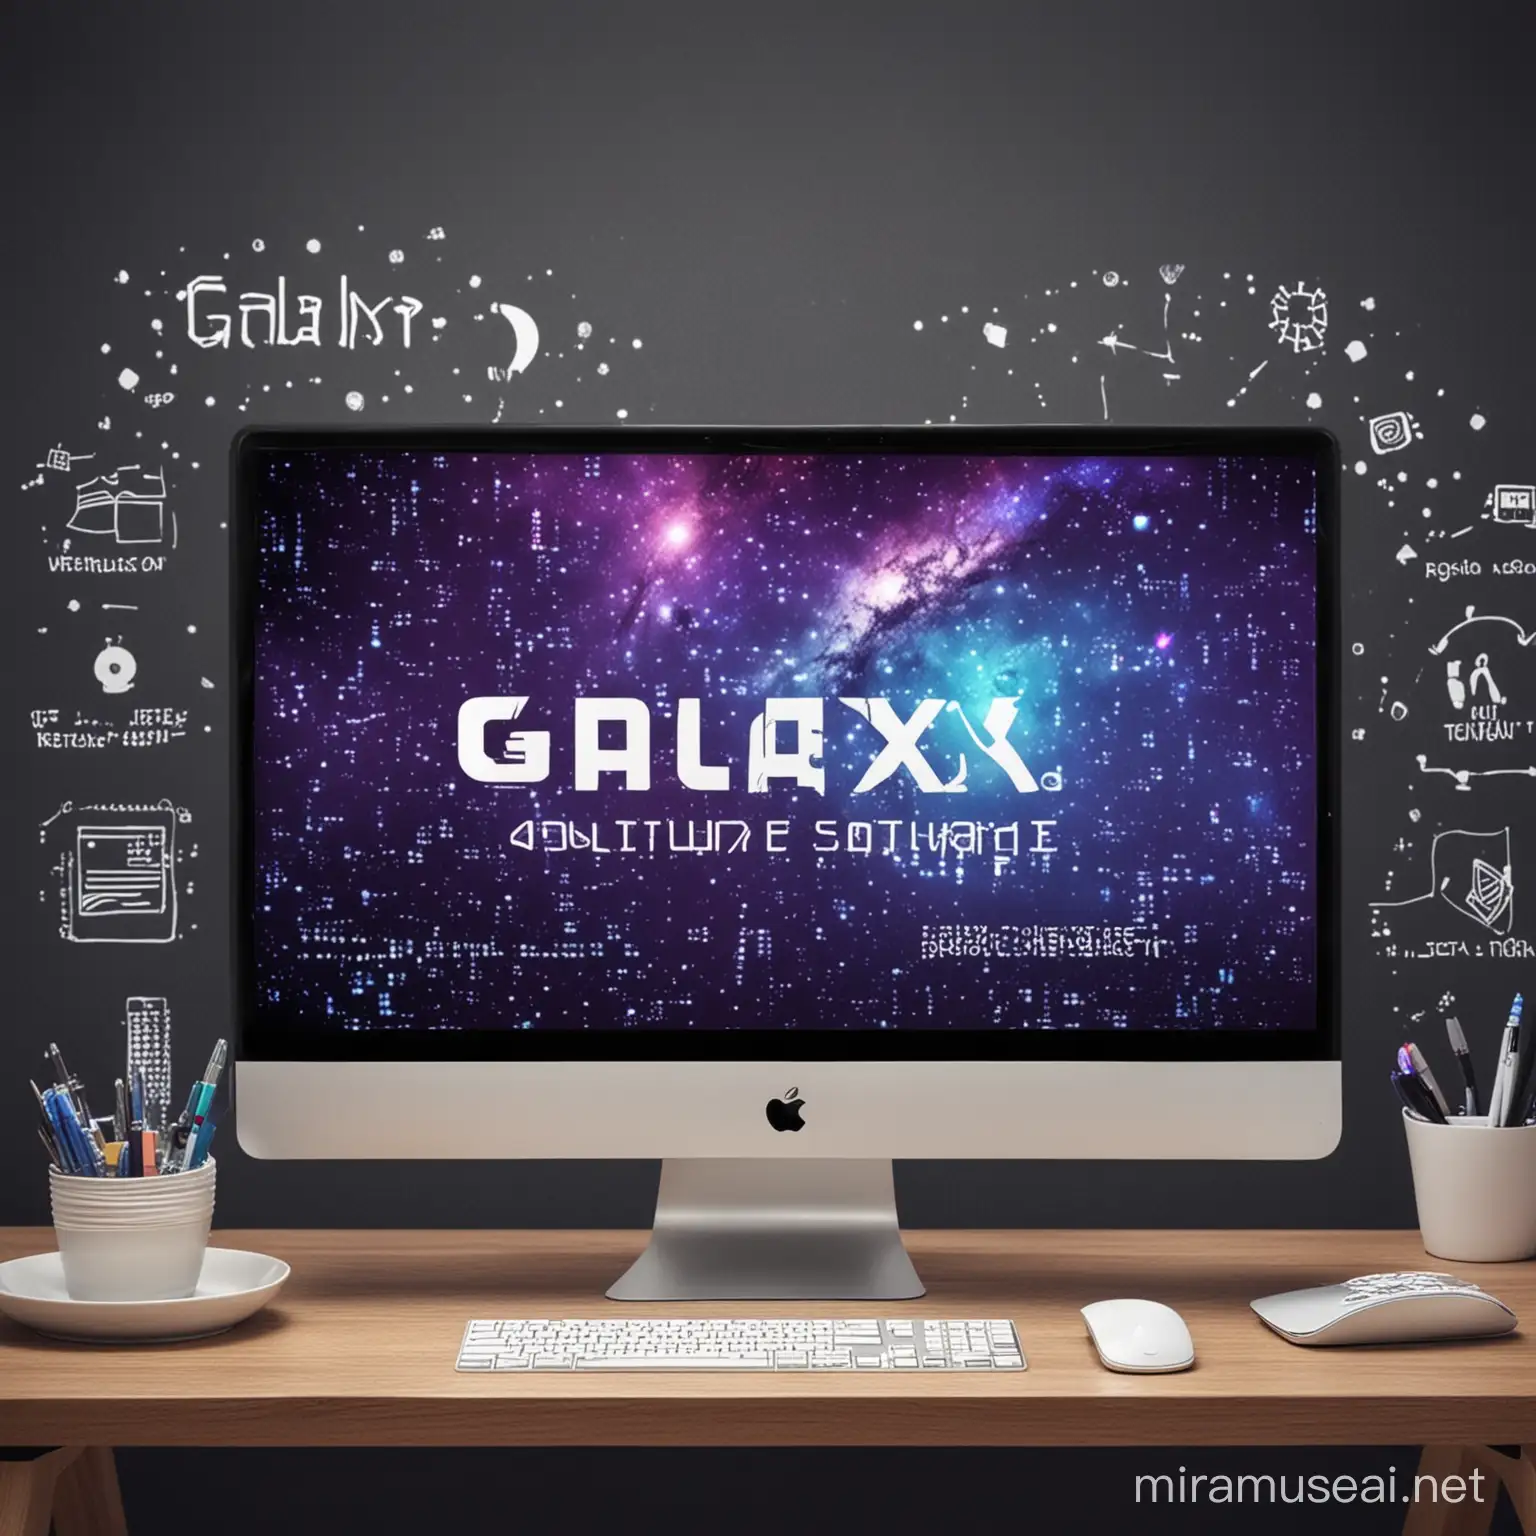 Innovative Galaxy Software Development Team Creating NextGen Solutions